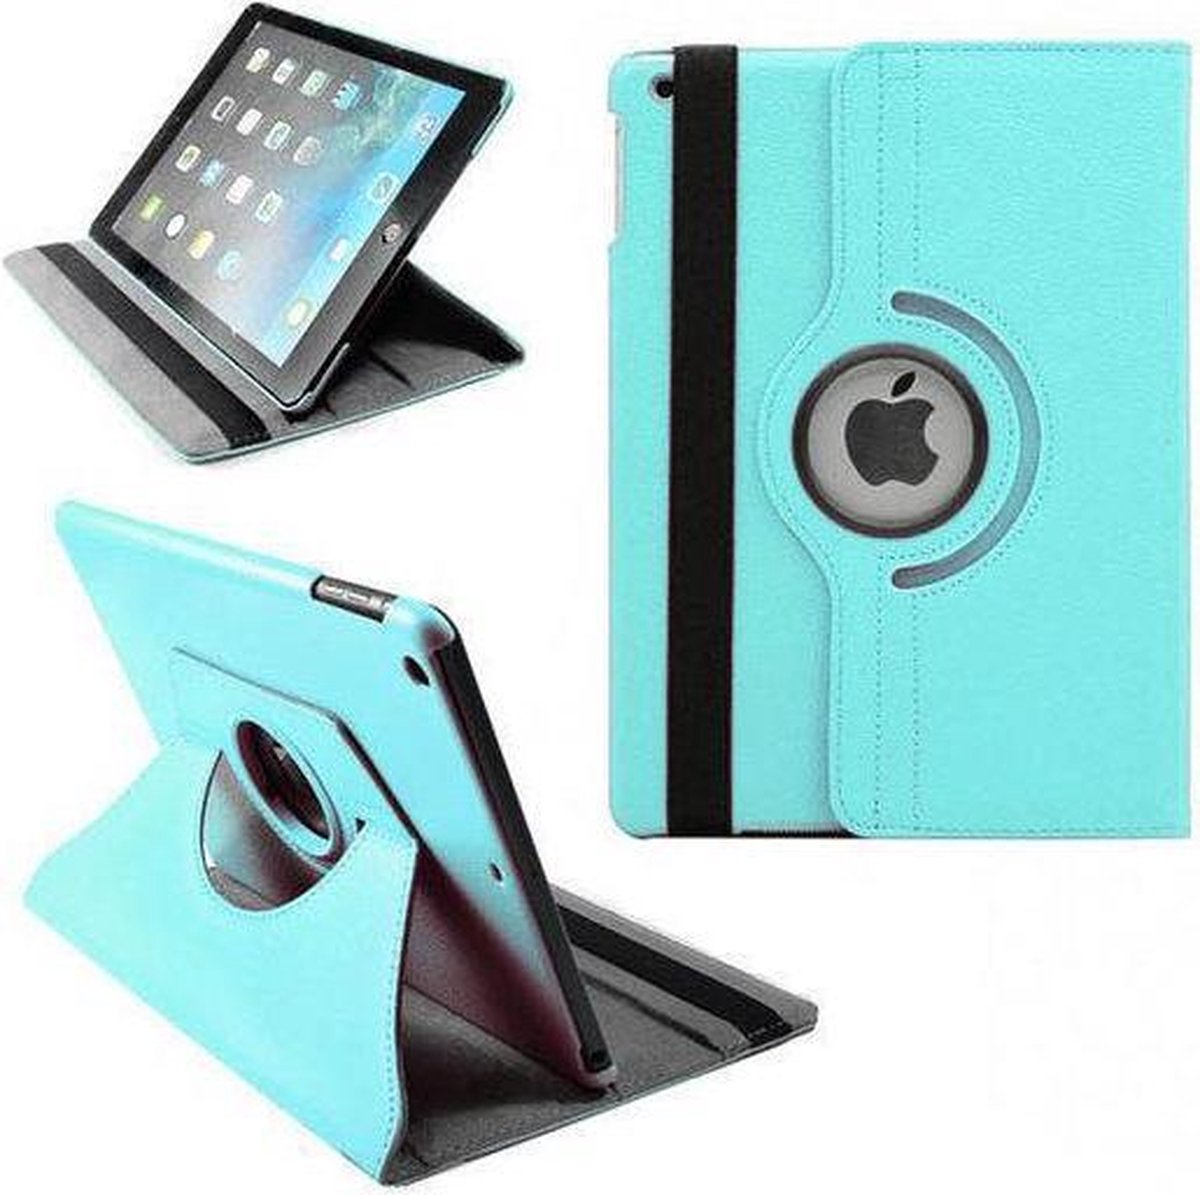 Apple iPad 5 Air Leather 360 Degree Rotating Case Cover Stand Sleep Wake Light Blue/ Licht Blauw